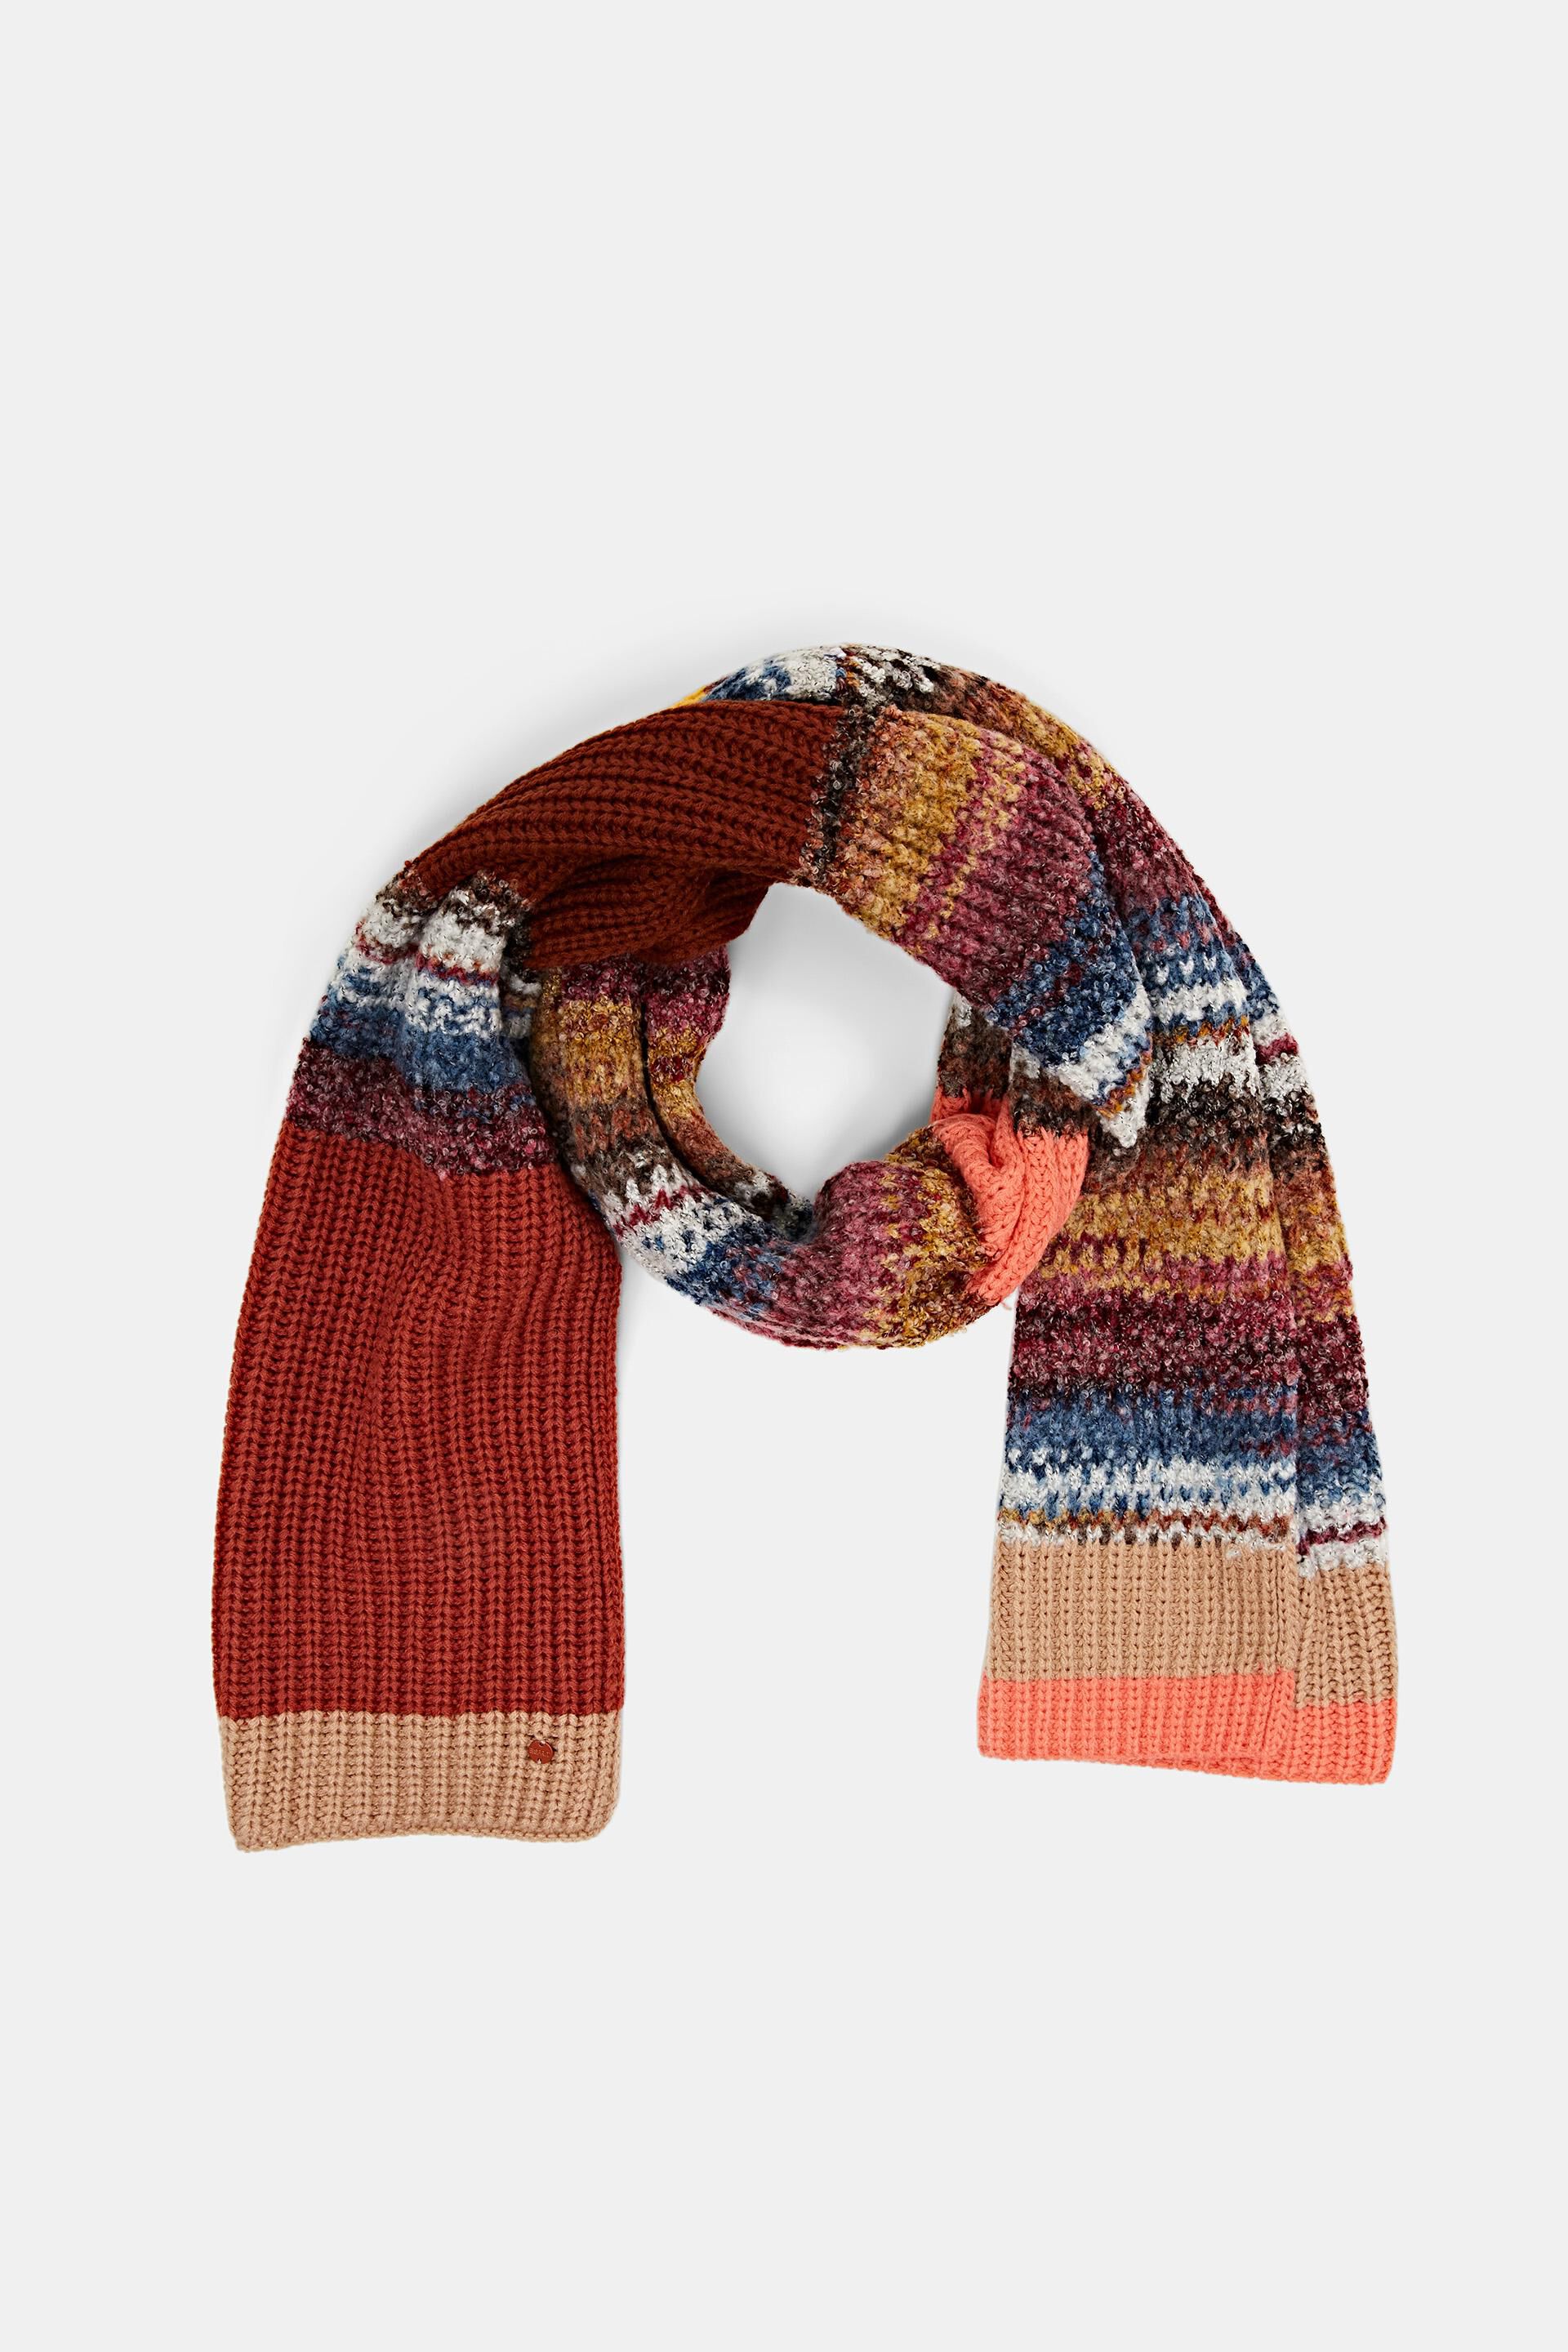 Esprit Multi-coloured scarf, blend knit wool